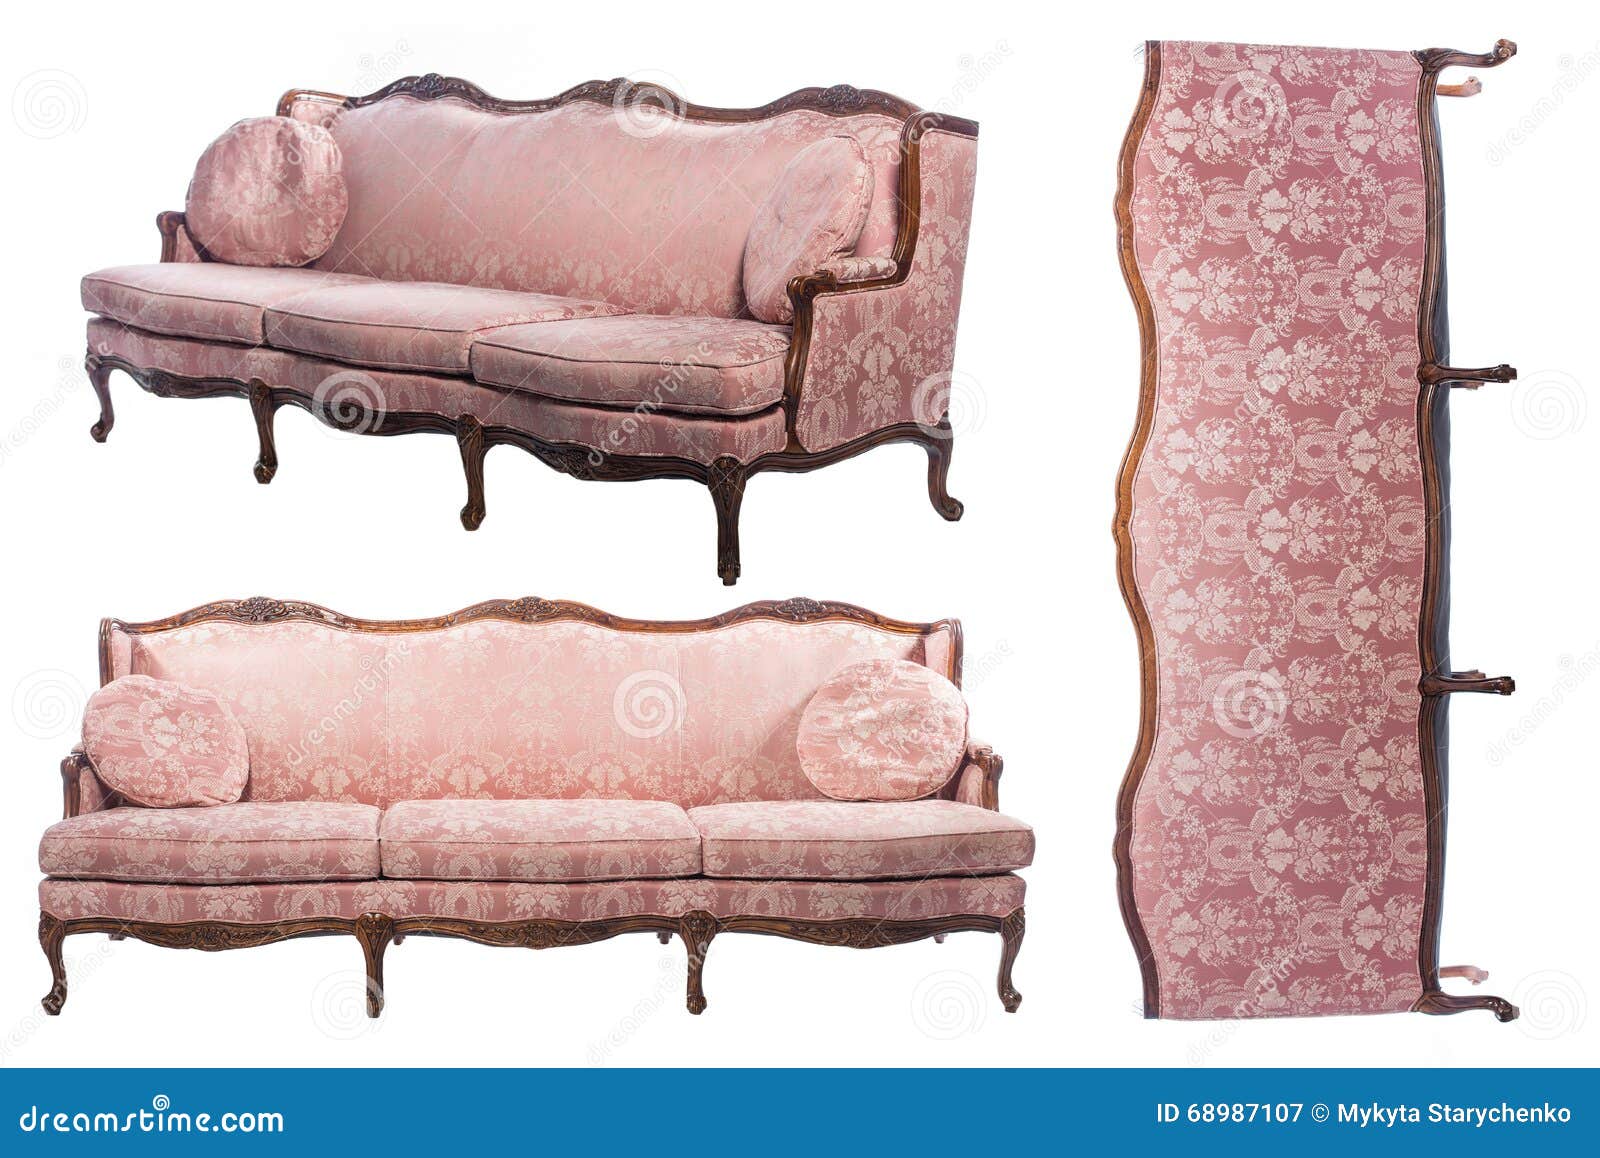 Luxury Old Fashioned Vintage Sofa from All Sides Isolated on White  Background Stock Illustration - Illustration of glamor, isolated: 68987107